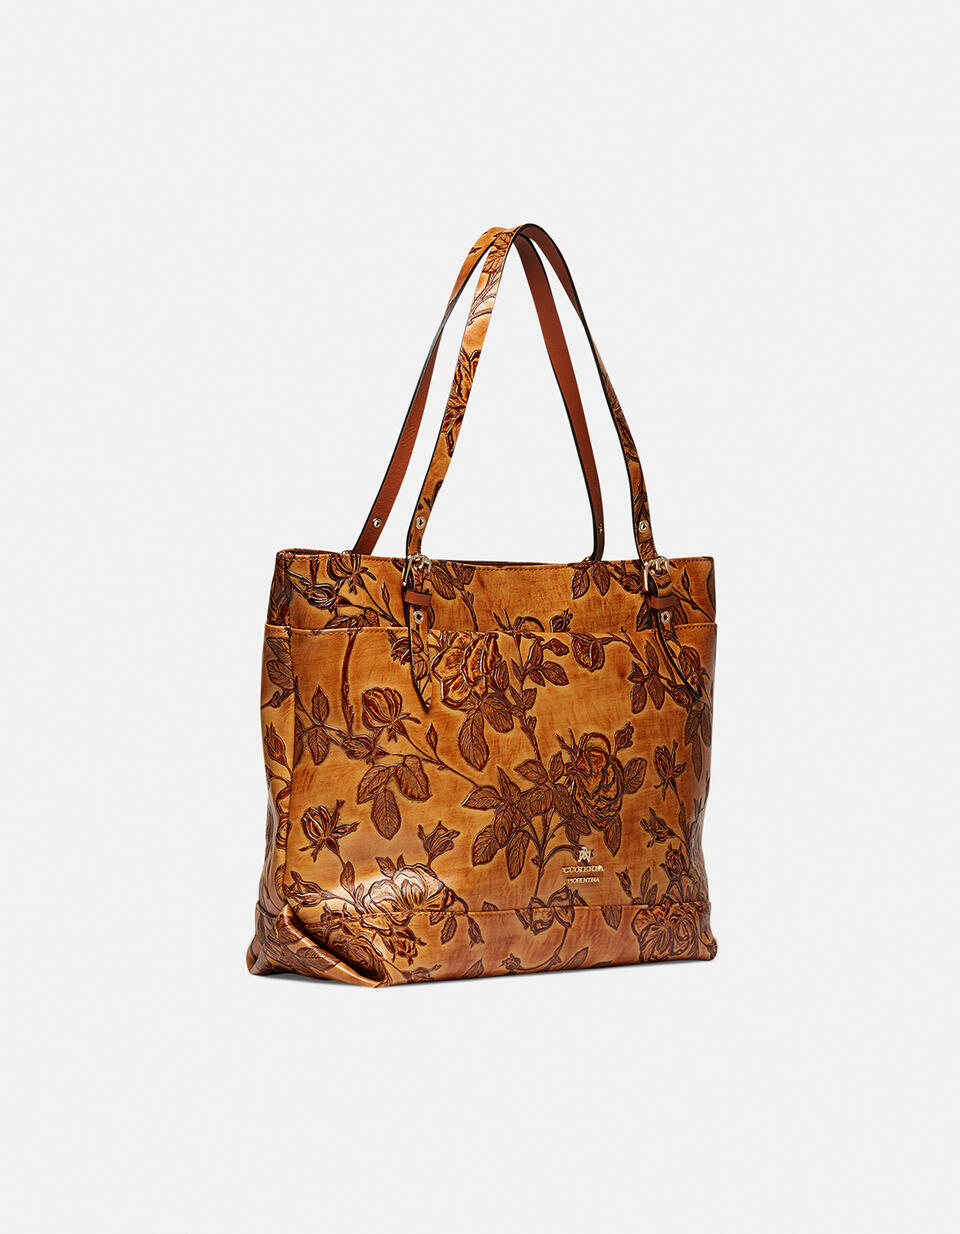 Big shopping bag keystone design - SHOPPING - WOMEN'S BAGS | bags Mimì BEIGE - SHOPPING - WOMEN'S BAGS | bagsCuoieria Fiorentina